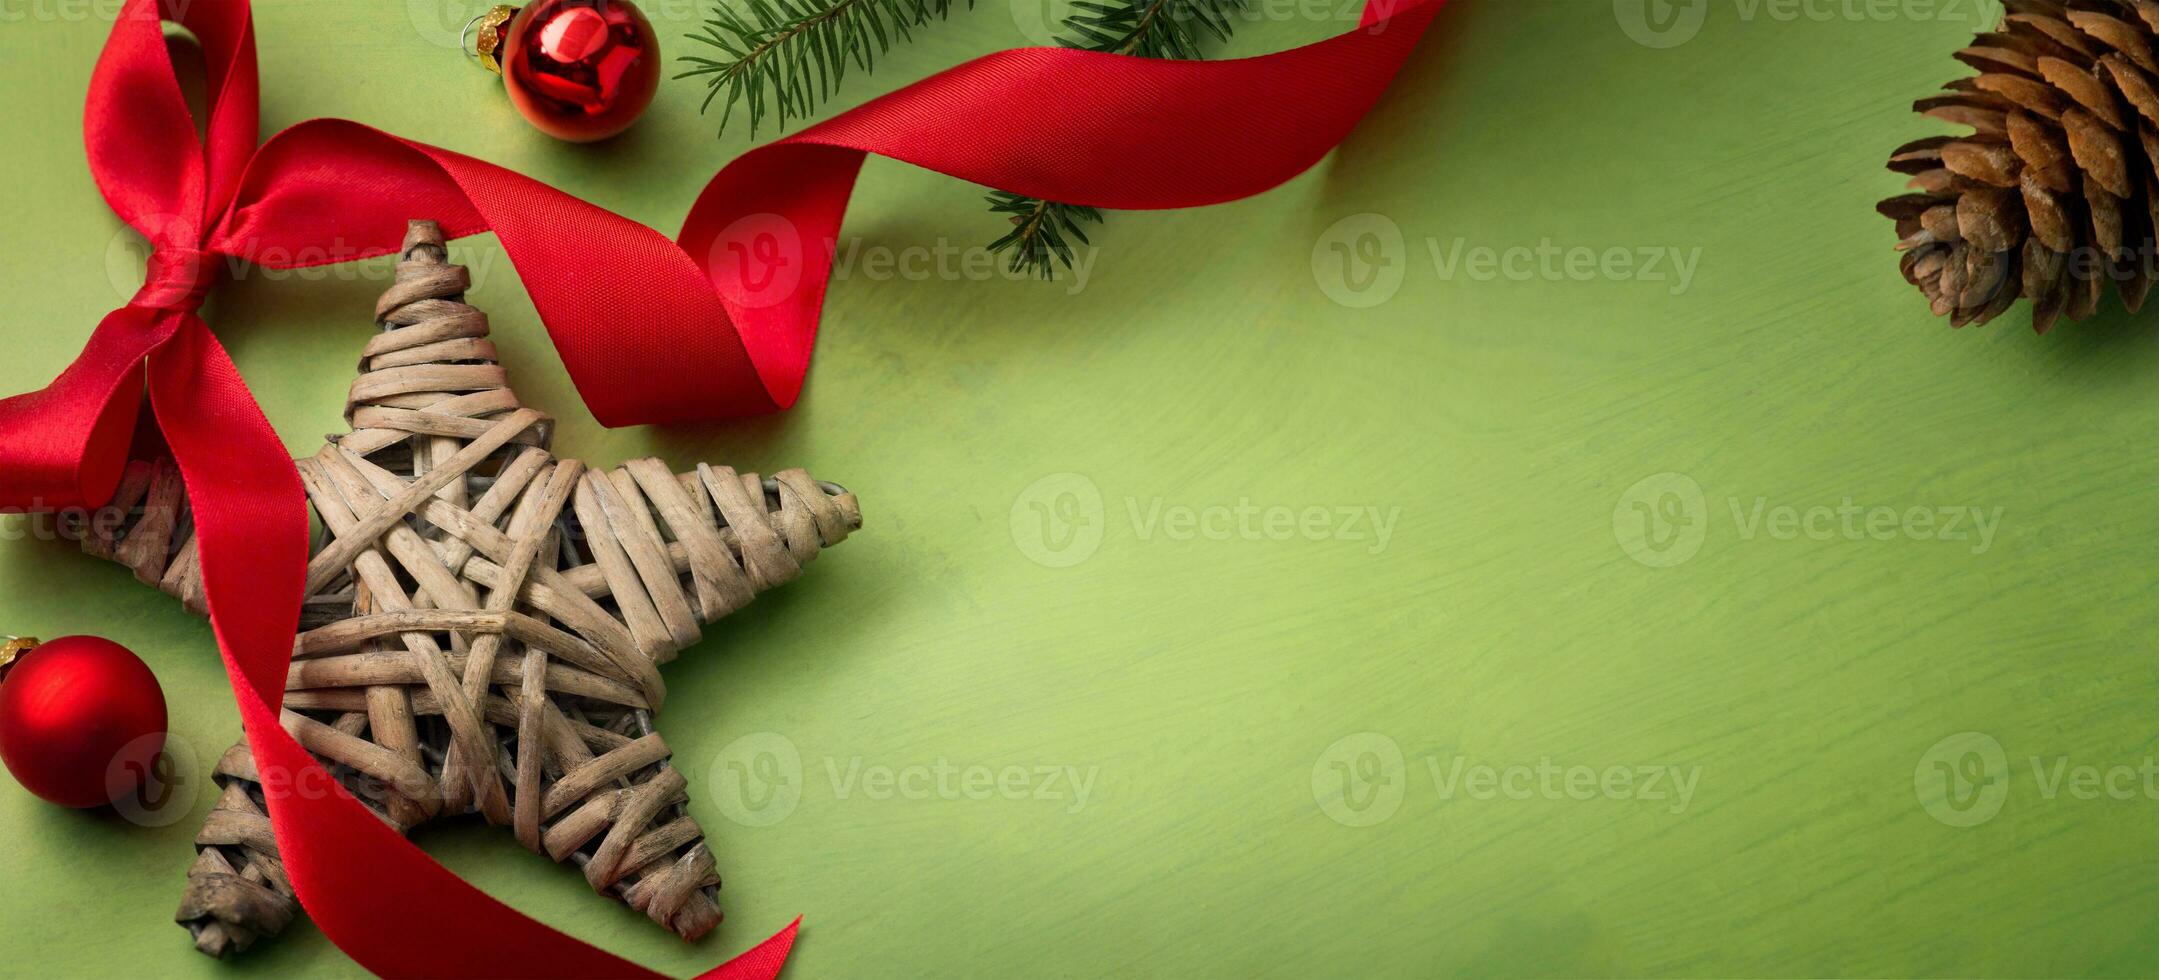 art Christmas and eco-friendly handmade gift decorations. eco christmas holiday concept, eco decor banner photo